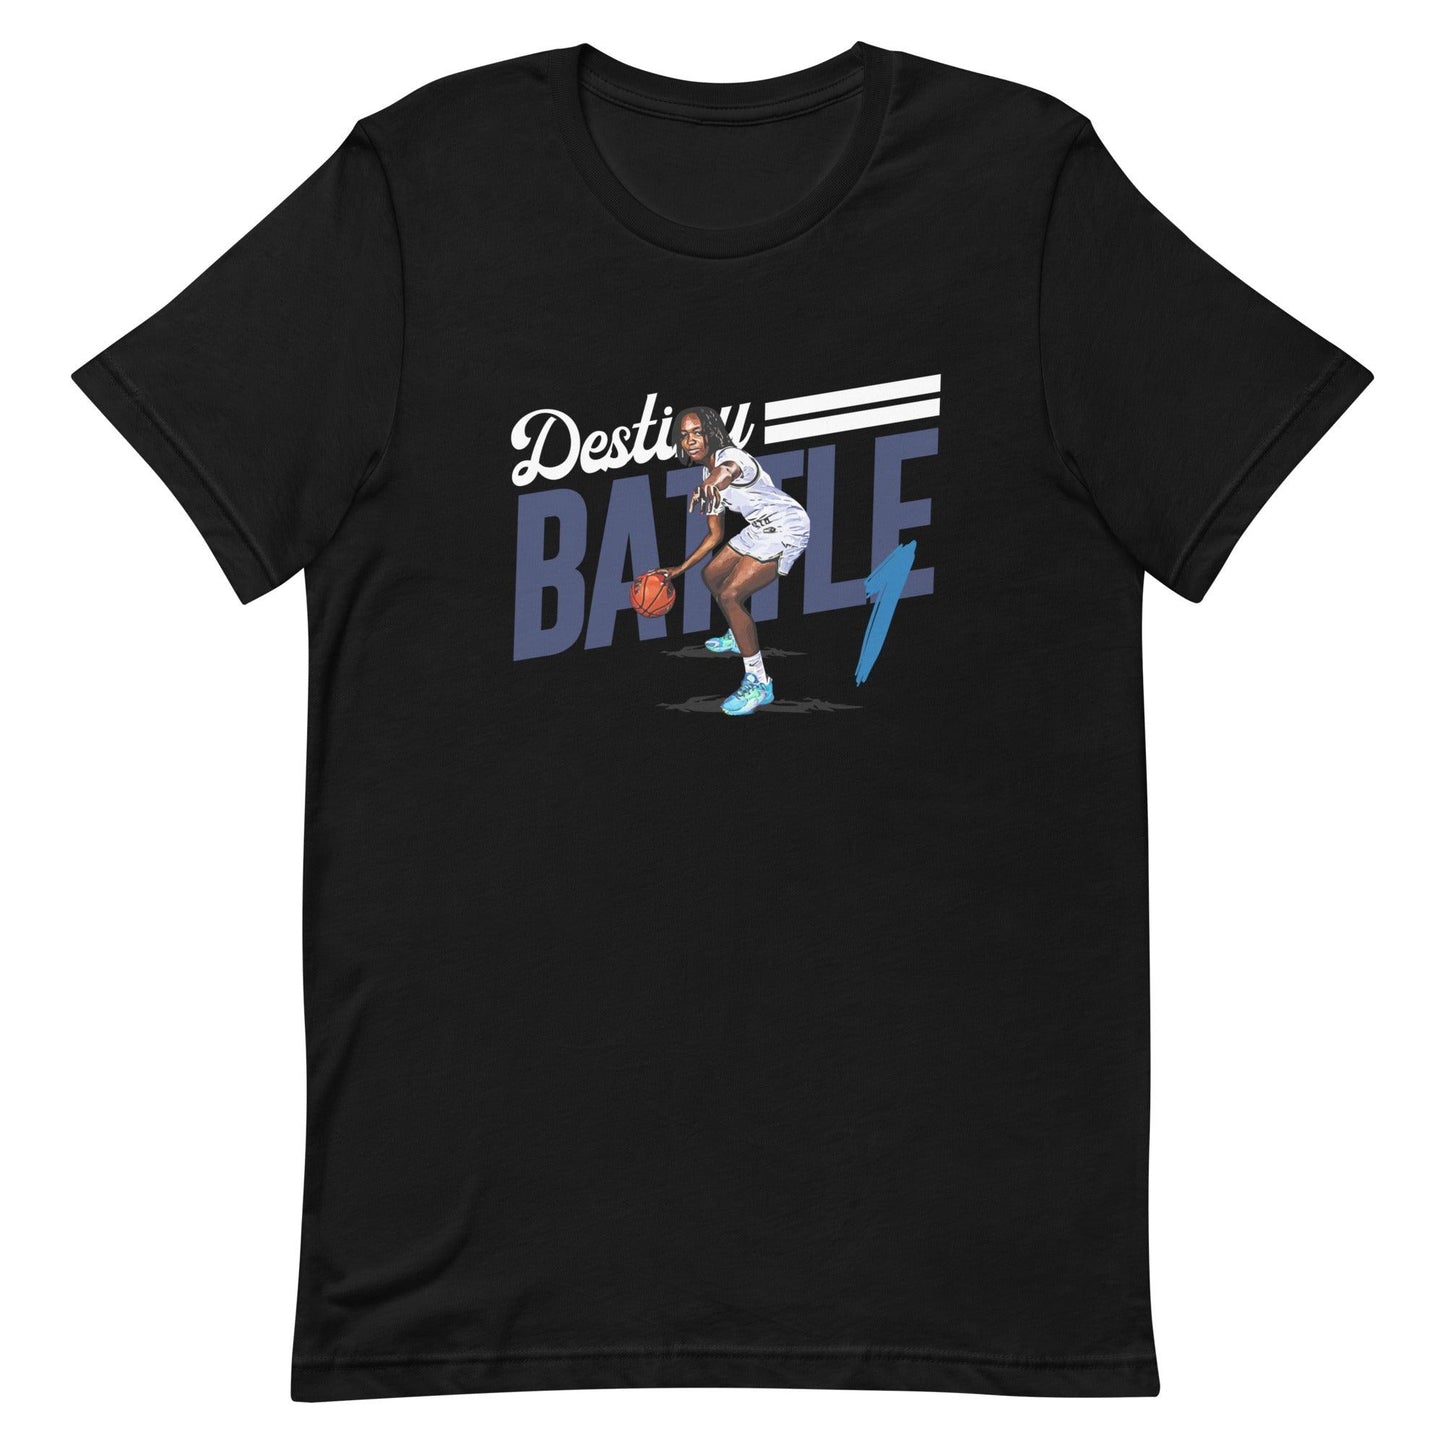 Destiny Battle "Jersey" t-shirt - Fan Arch